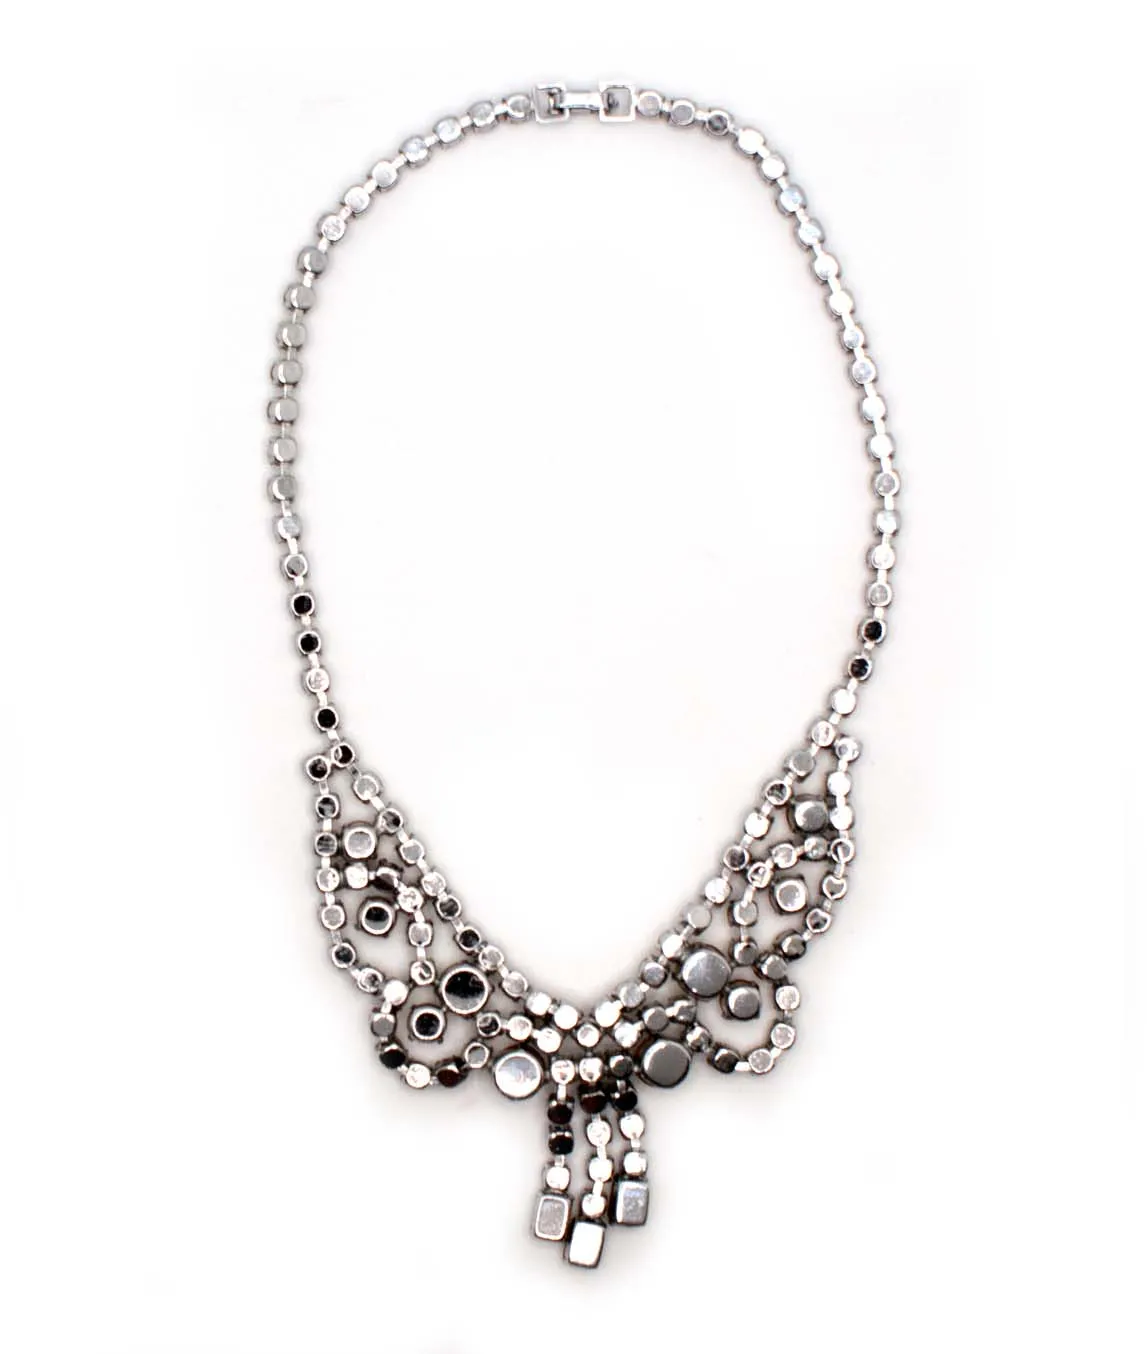 Silver metal reverse of draped festoon necklace